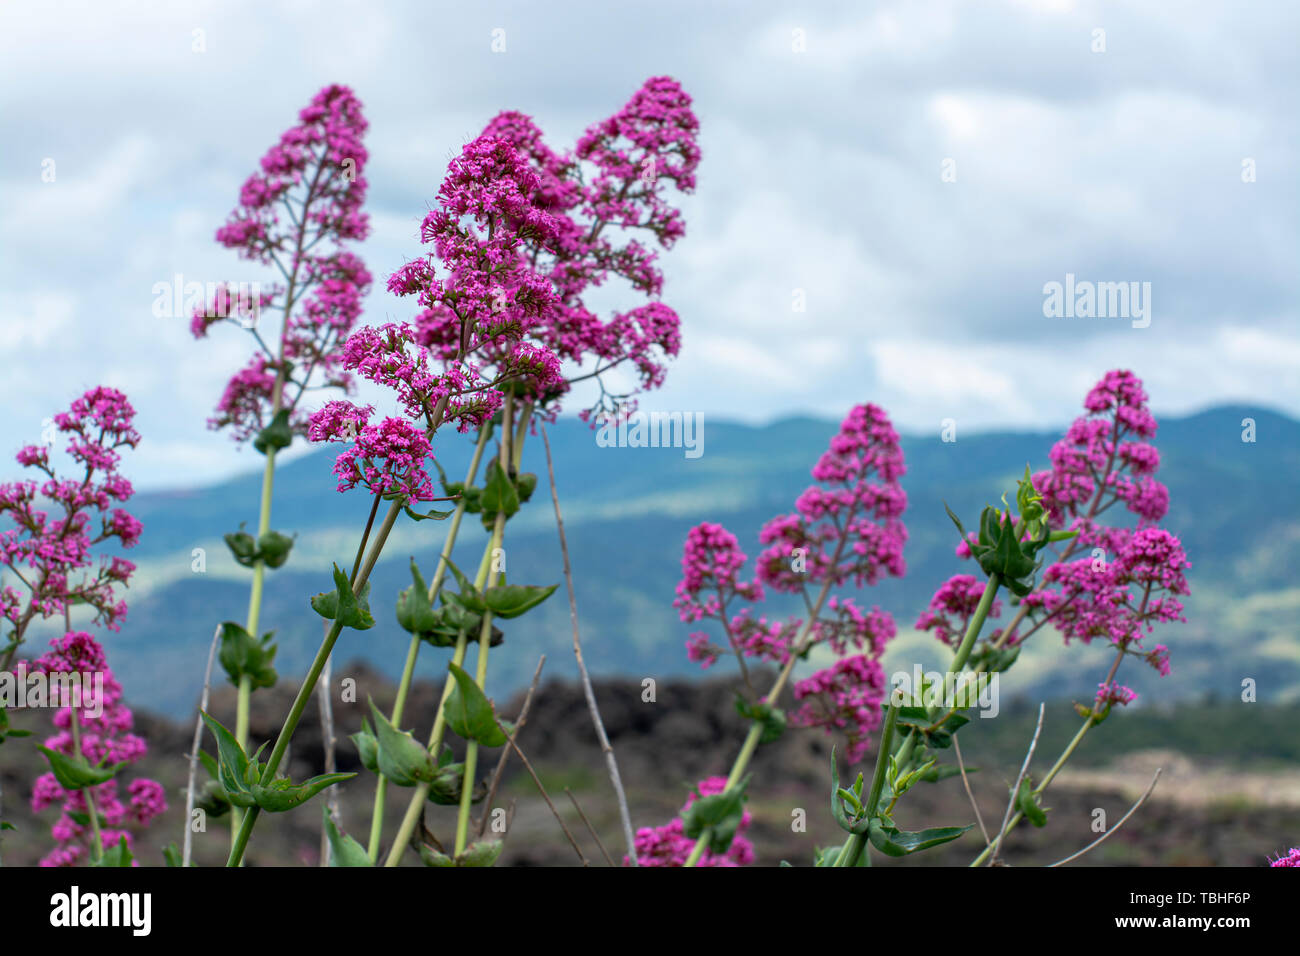 Flora of Mount Etna volcano, seasonal blossom of pink Centranthus ruber Valerian or Red valerian, popular garden plant with ornamental flowers. Stock Photo